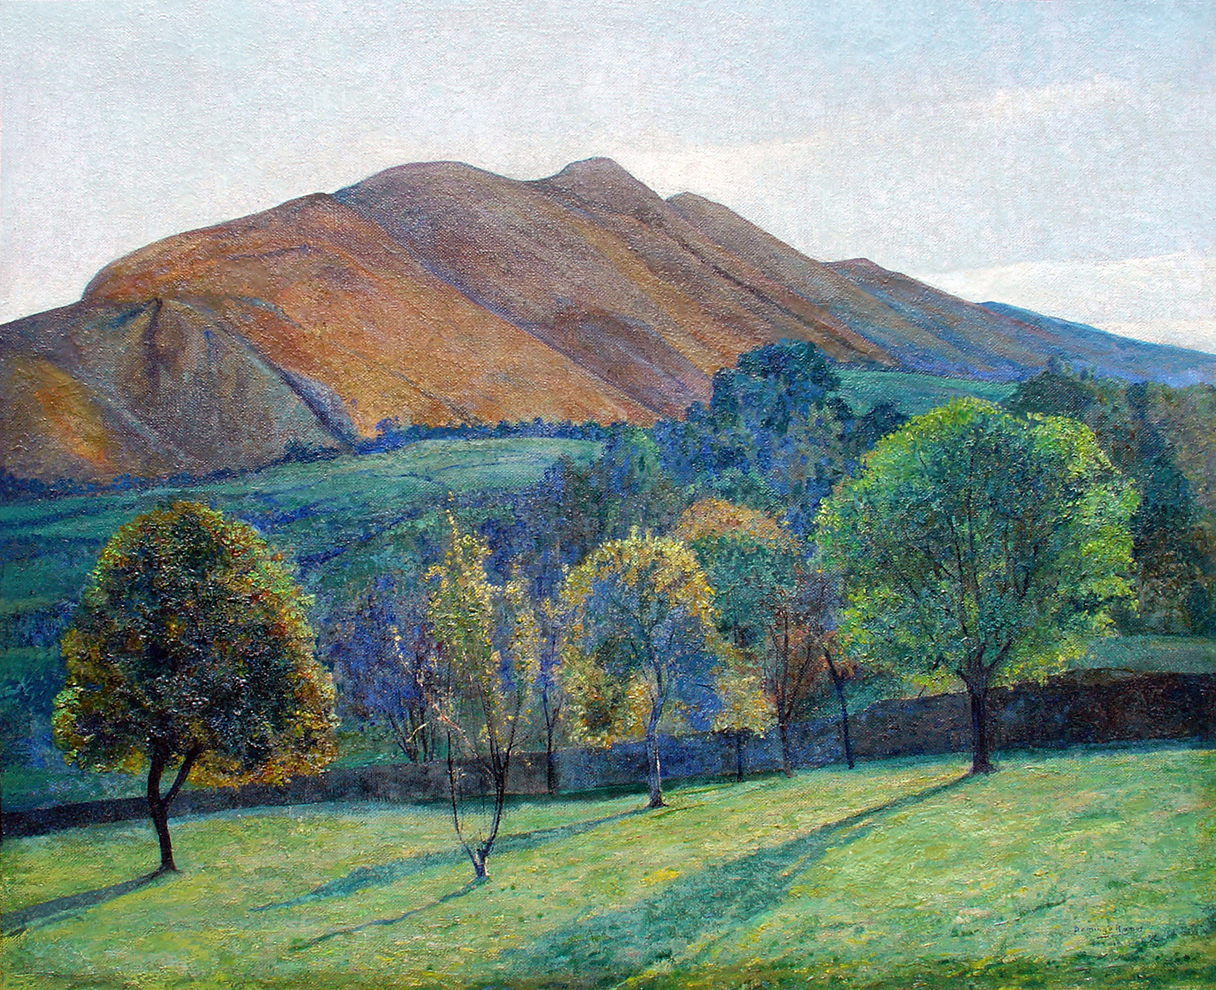 Landscape and Mountain<br>
<i>(Paisaje y Montaña)</i> by Domingo Ramos